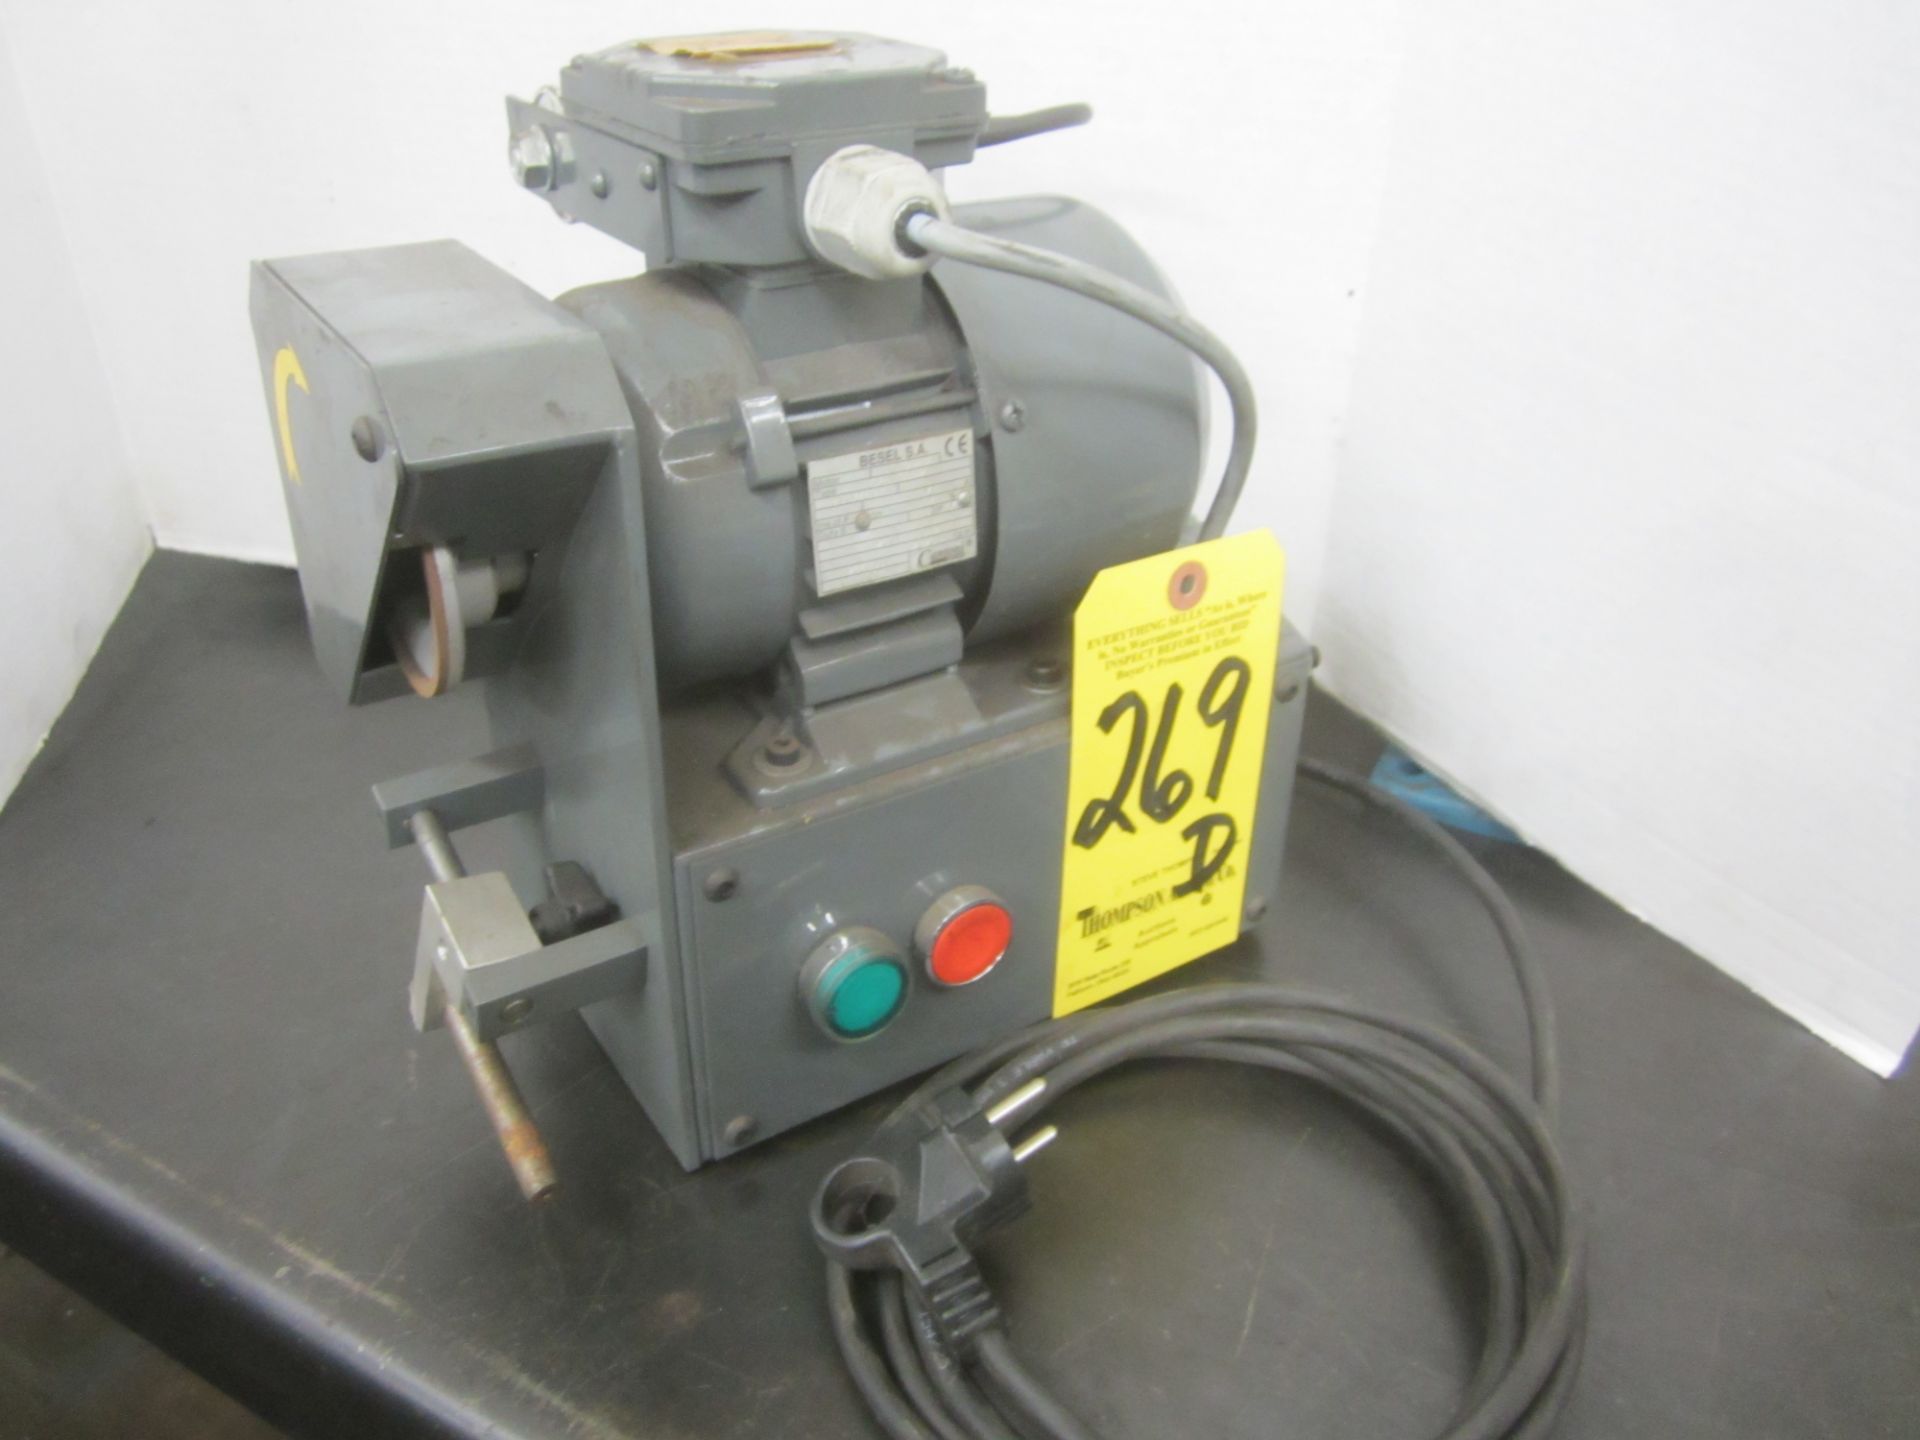 Serdi Tool Bit Grinder; Note Plugs into outlets on Serdi manual machine